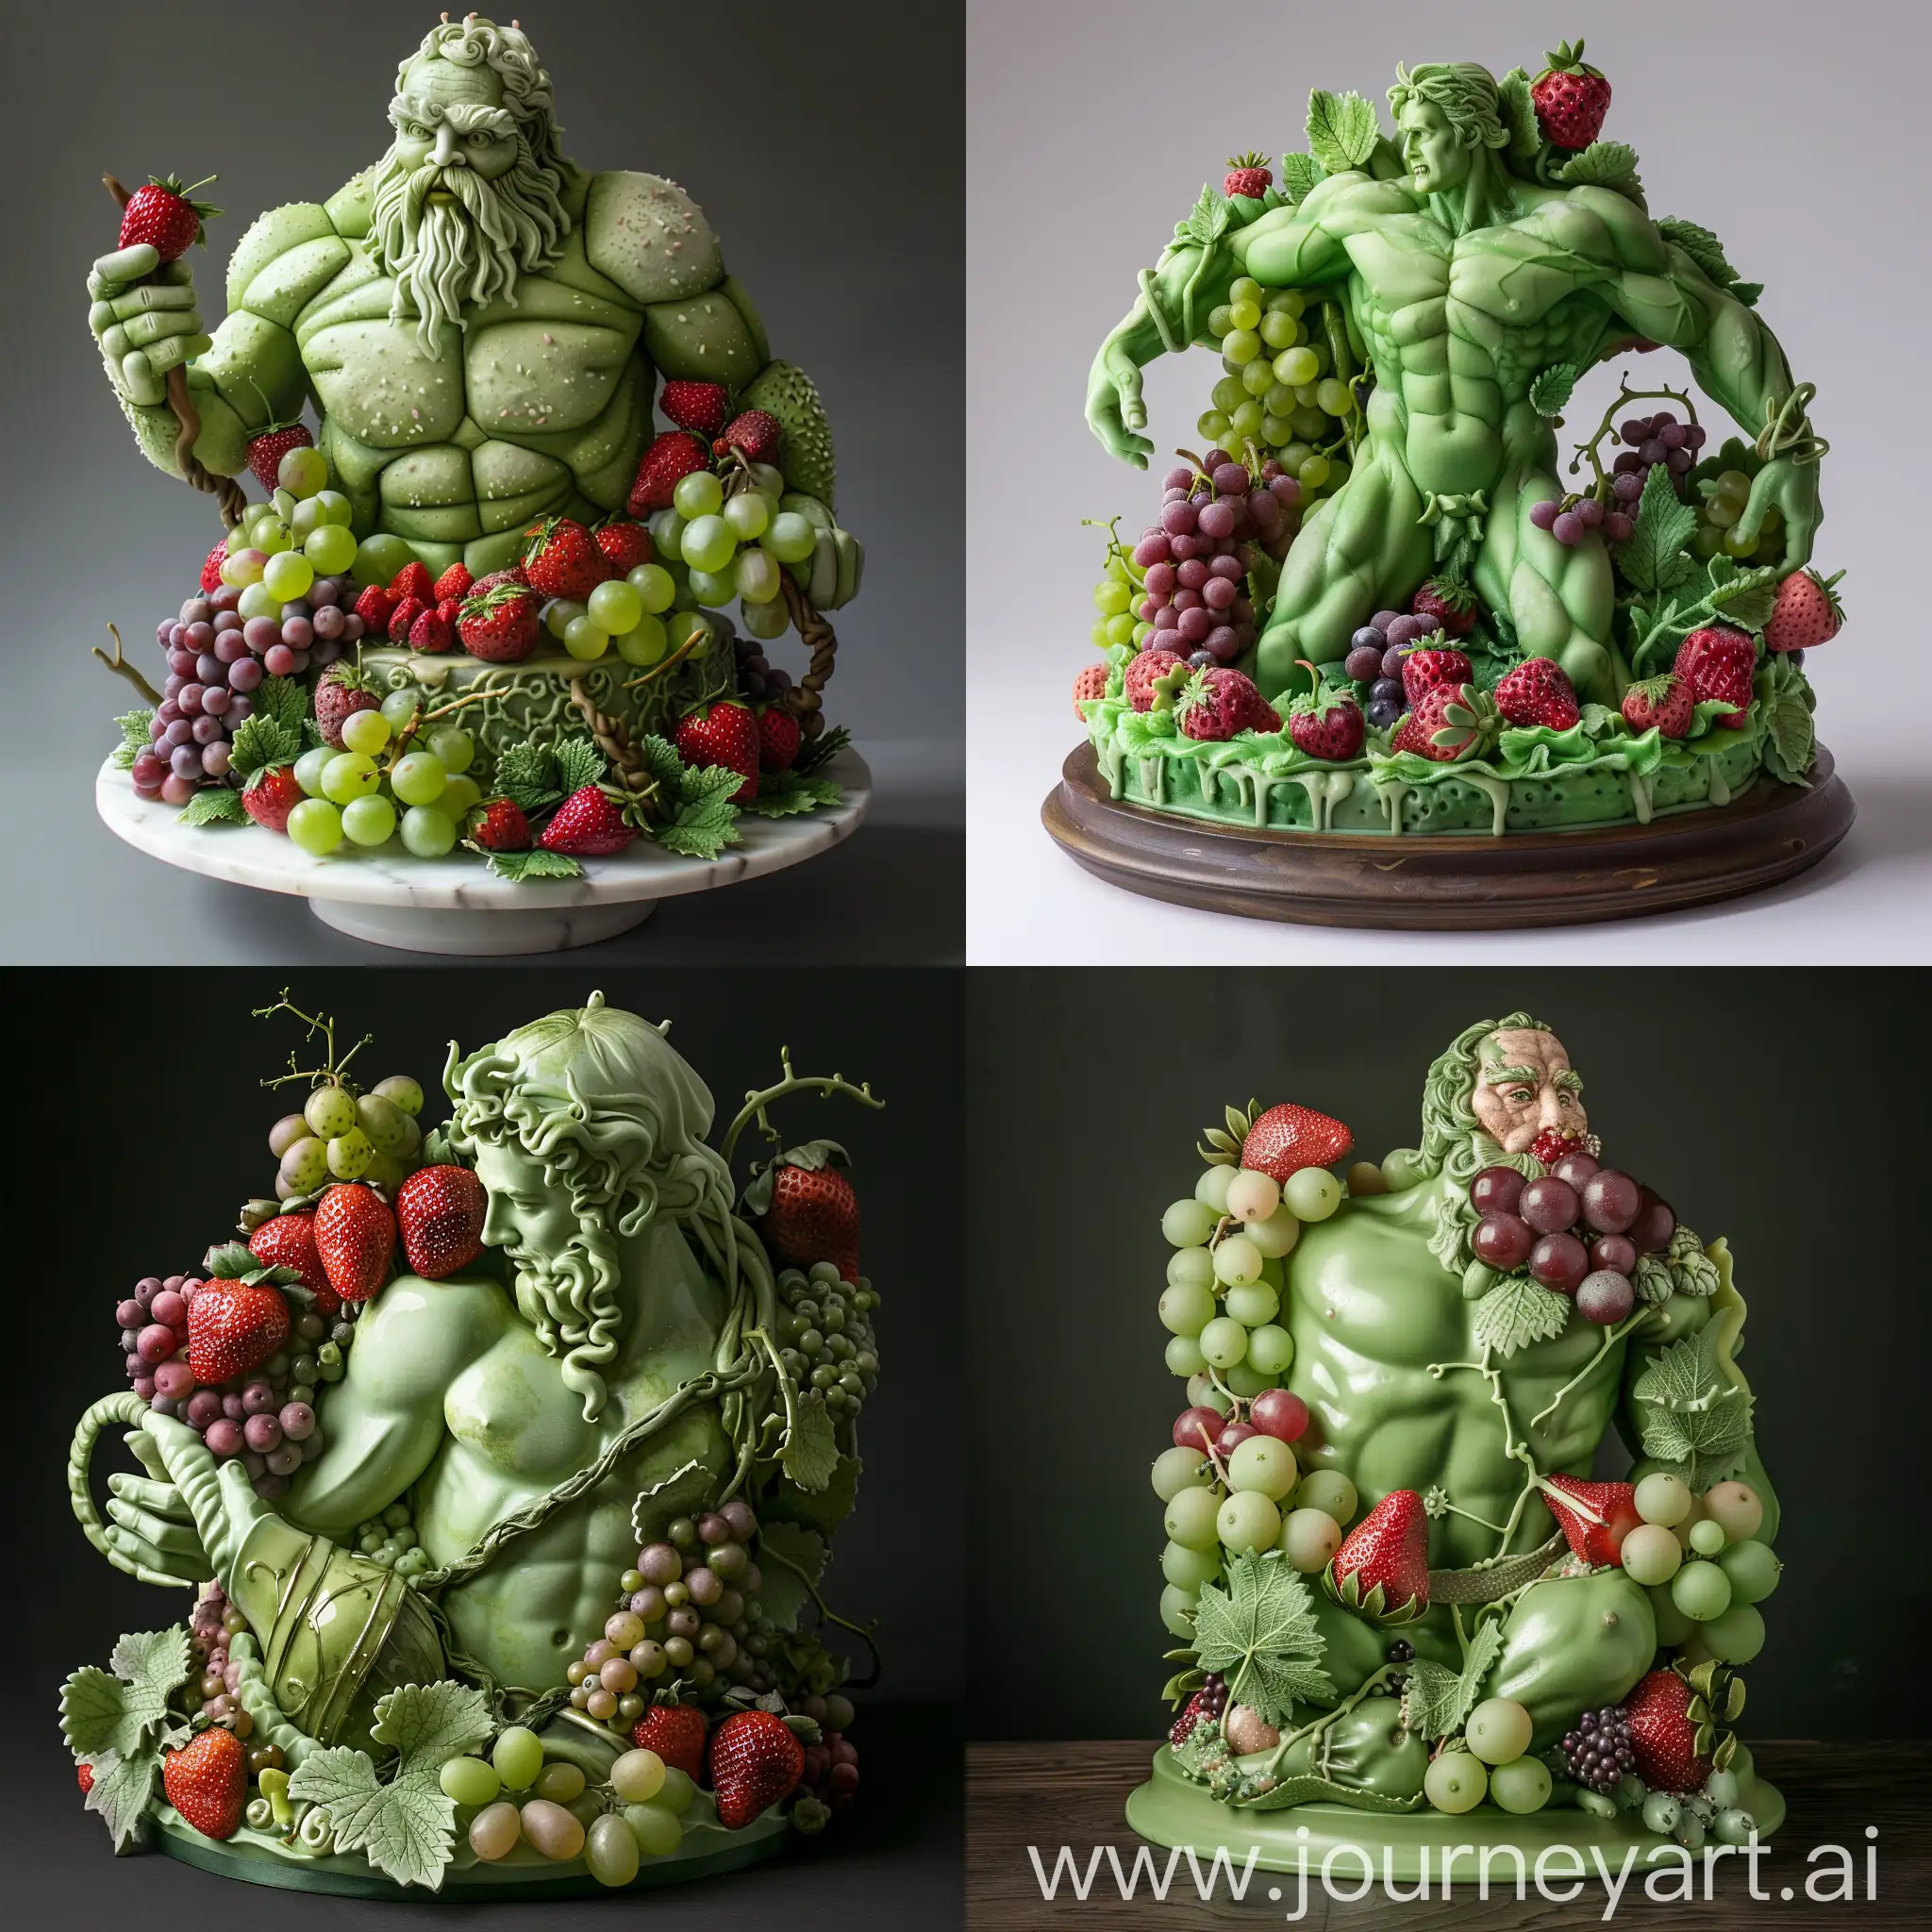 Atlas-Sculpture-Cake-Green-Cake-with-Berries